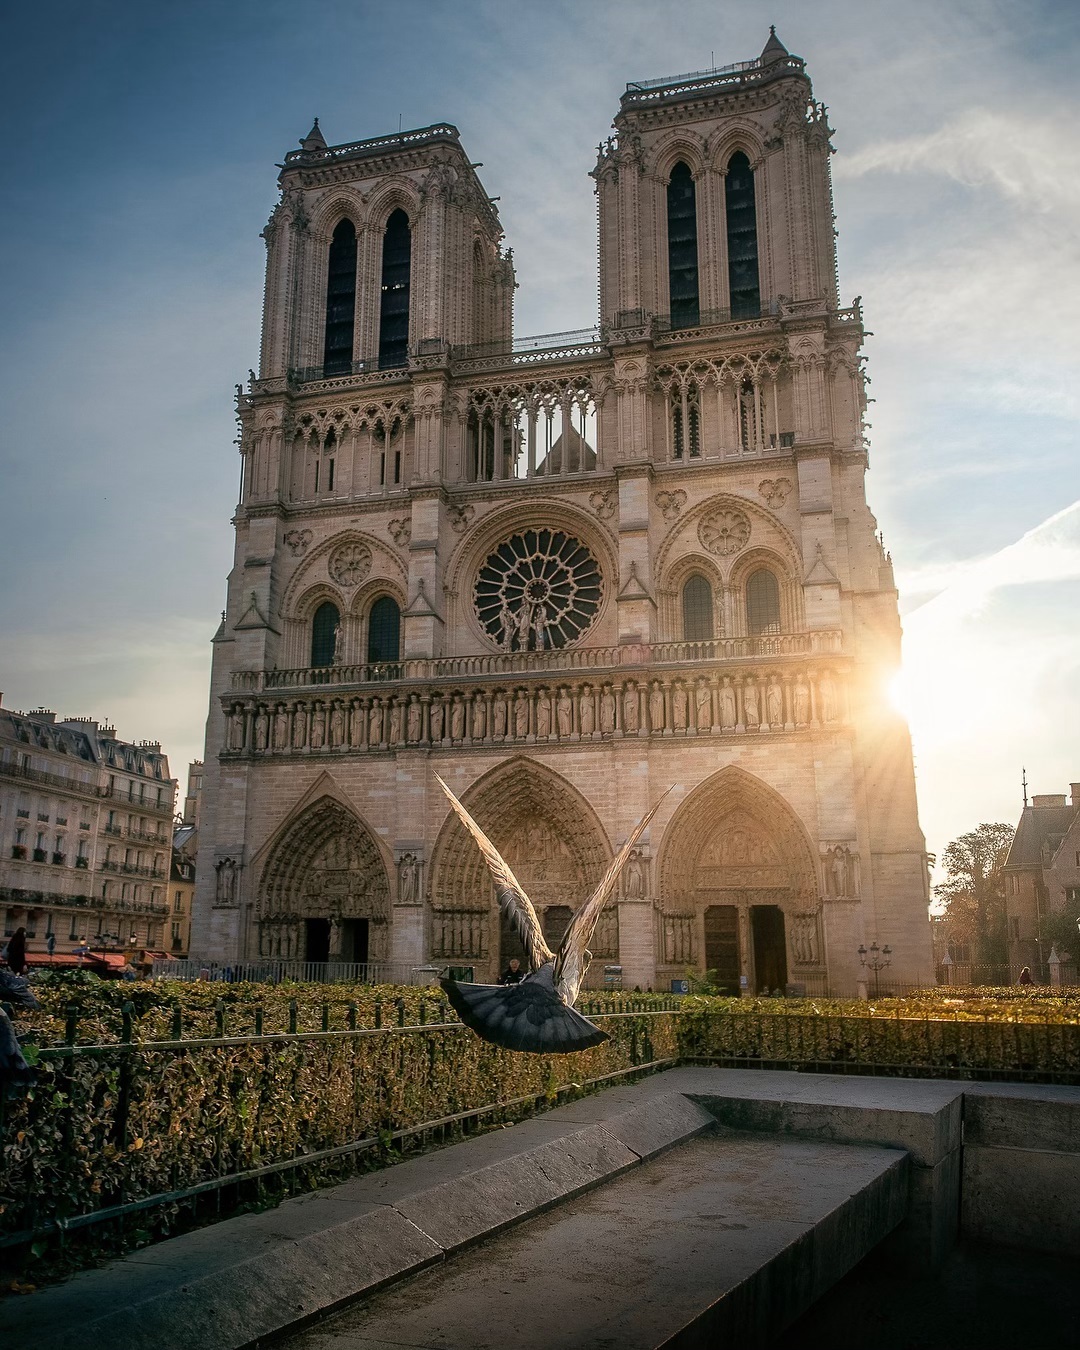 Cathédrale Notre-Dame de Paris - I’m truly saddened by the scenes